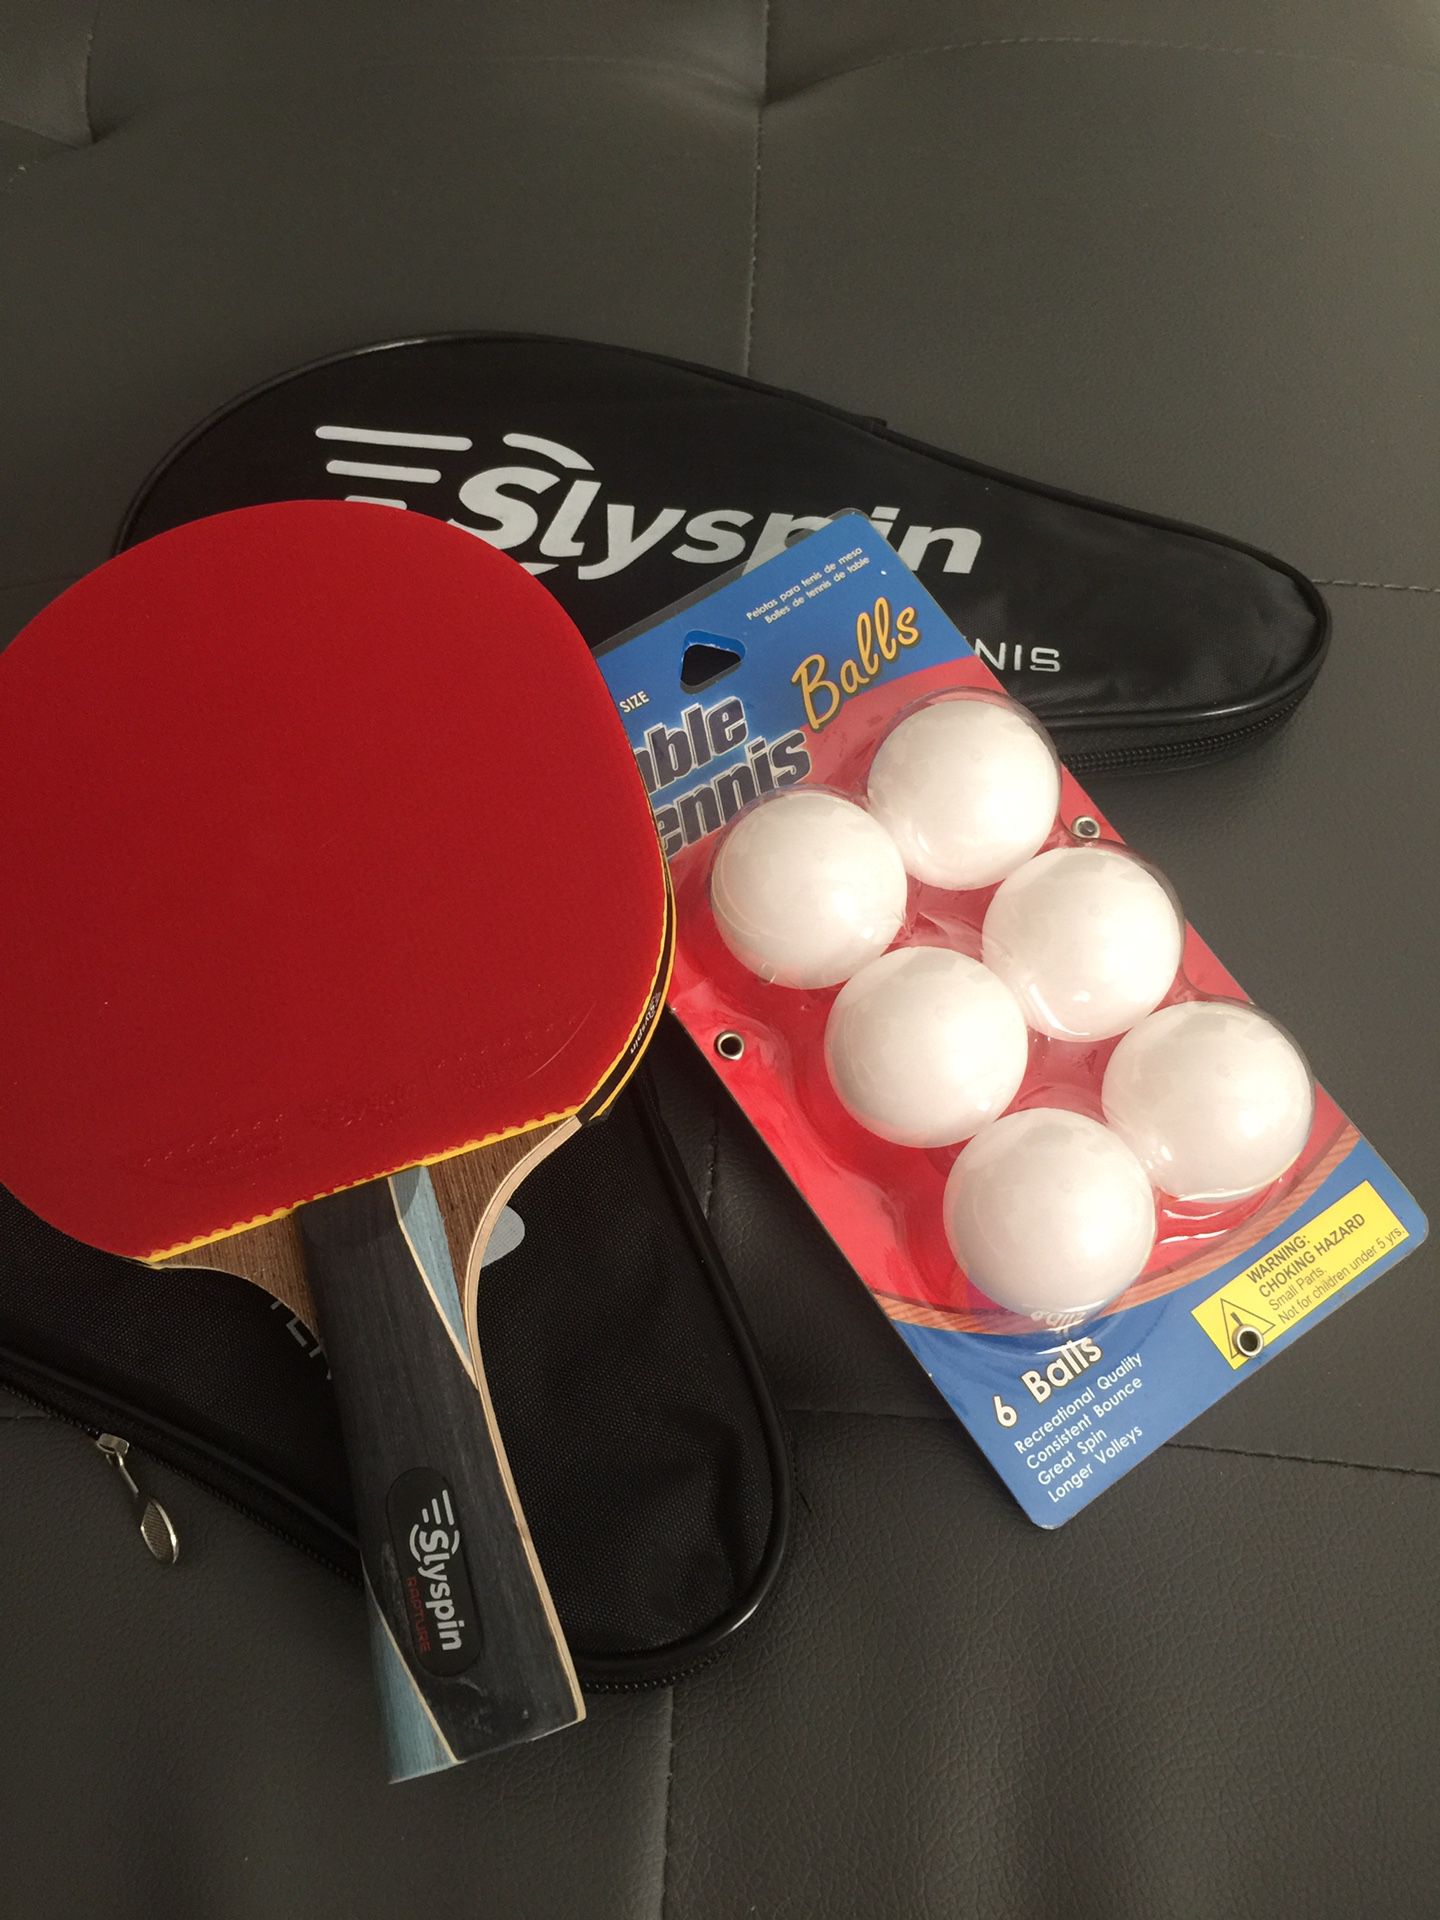 1 Slyspin Rapture Professional Table Tennis Racket Ping Pong Paddle w Storage Bag & Balls